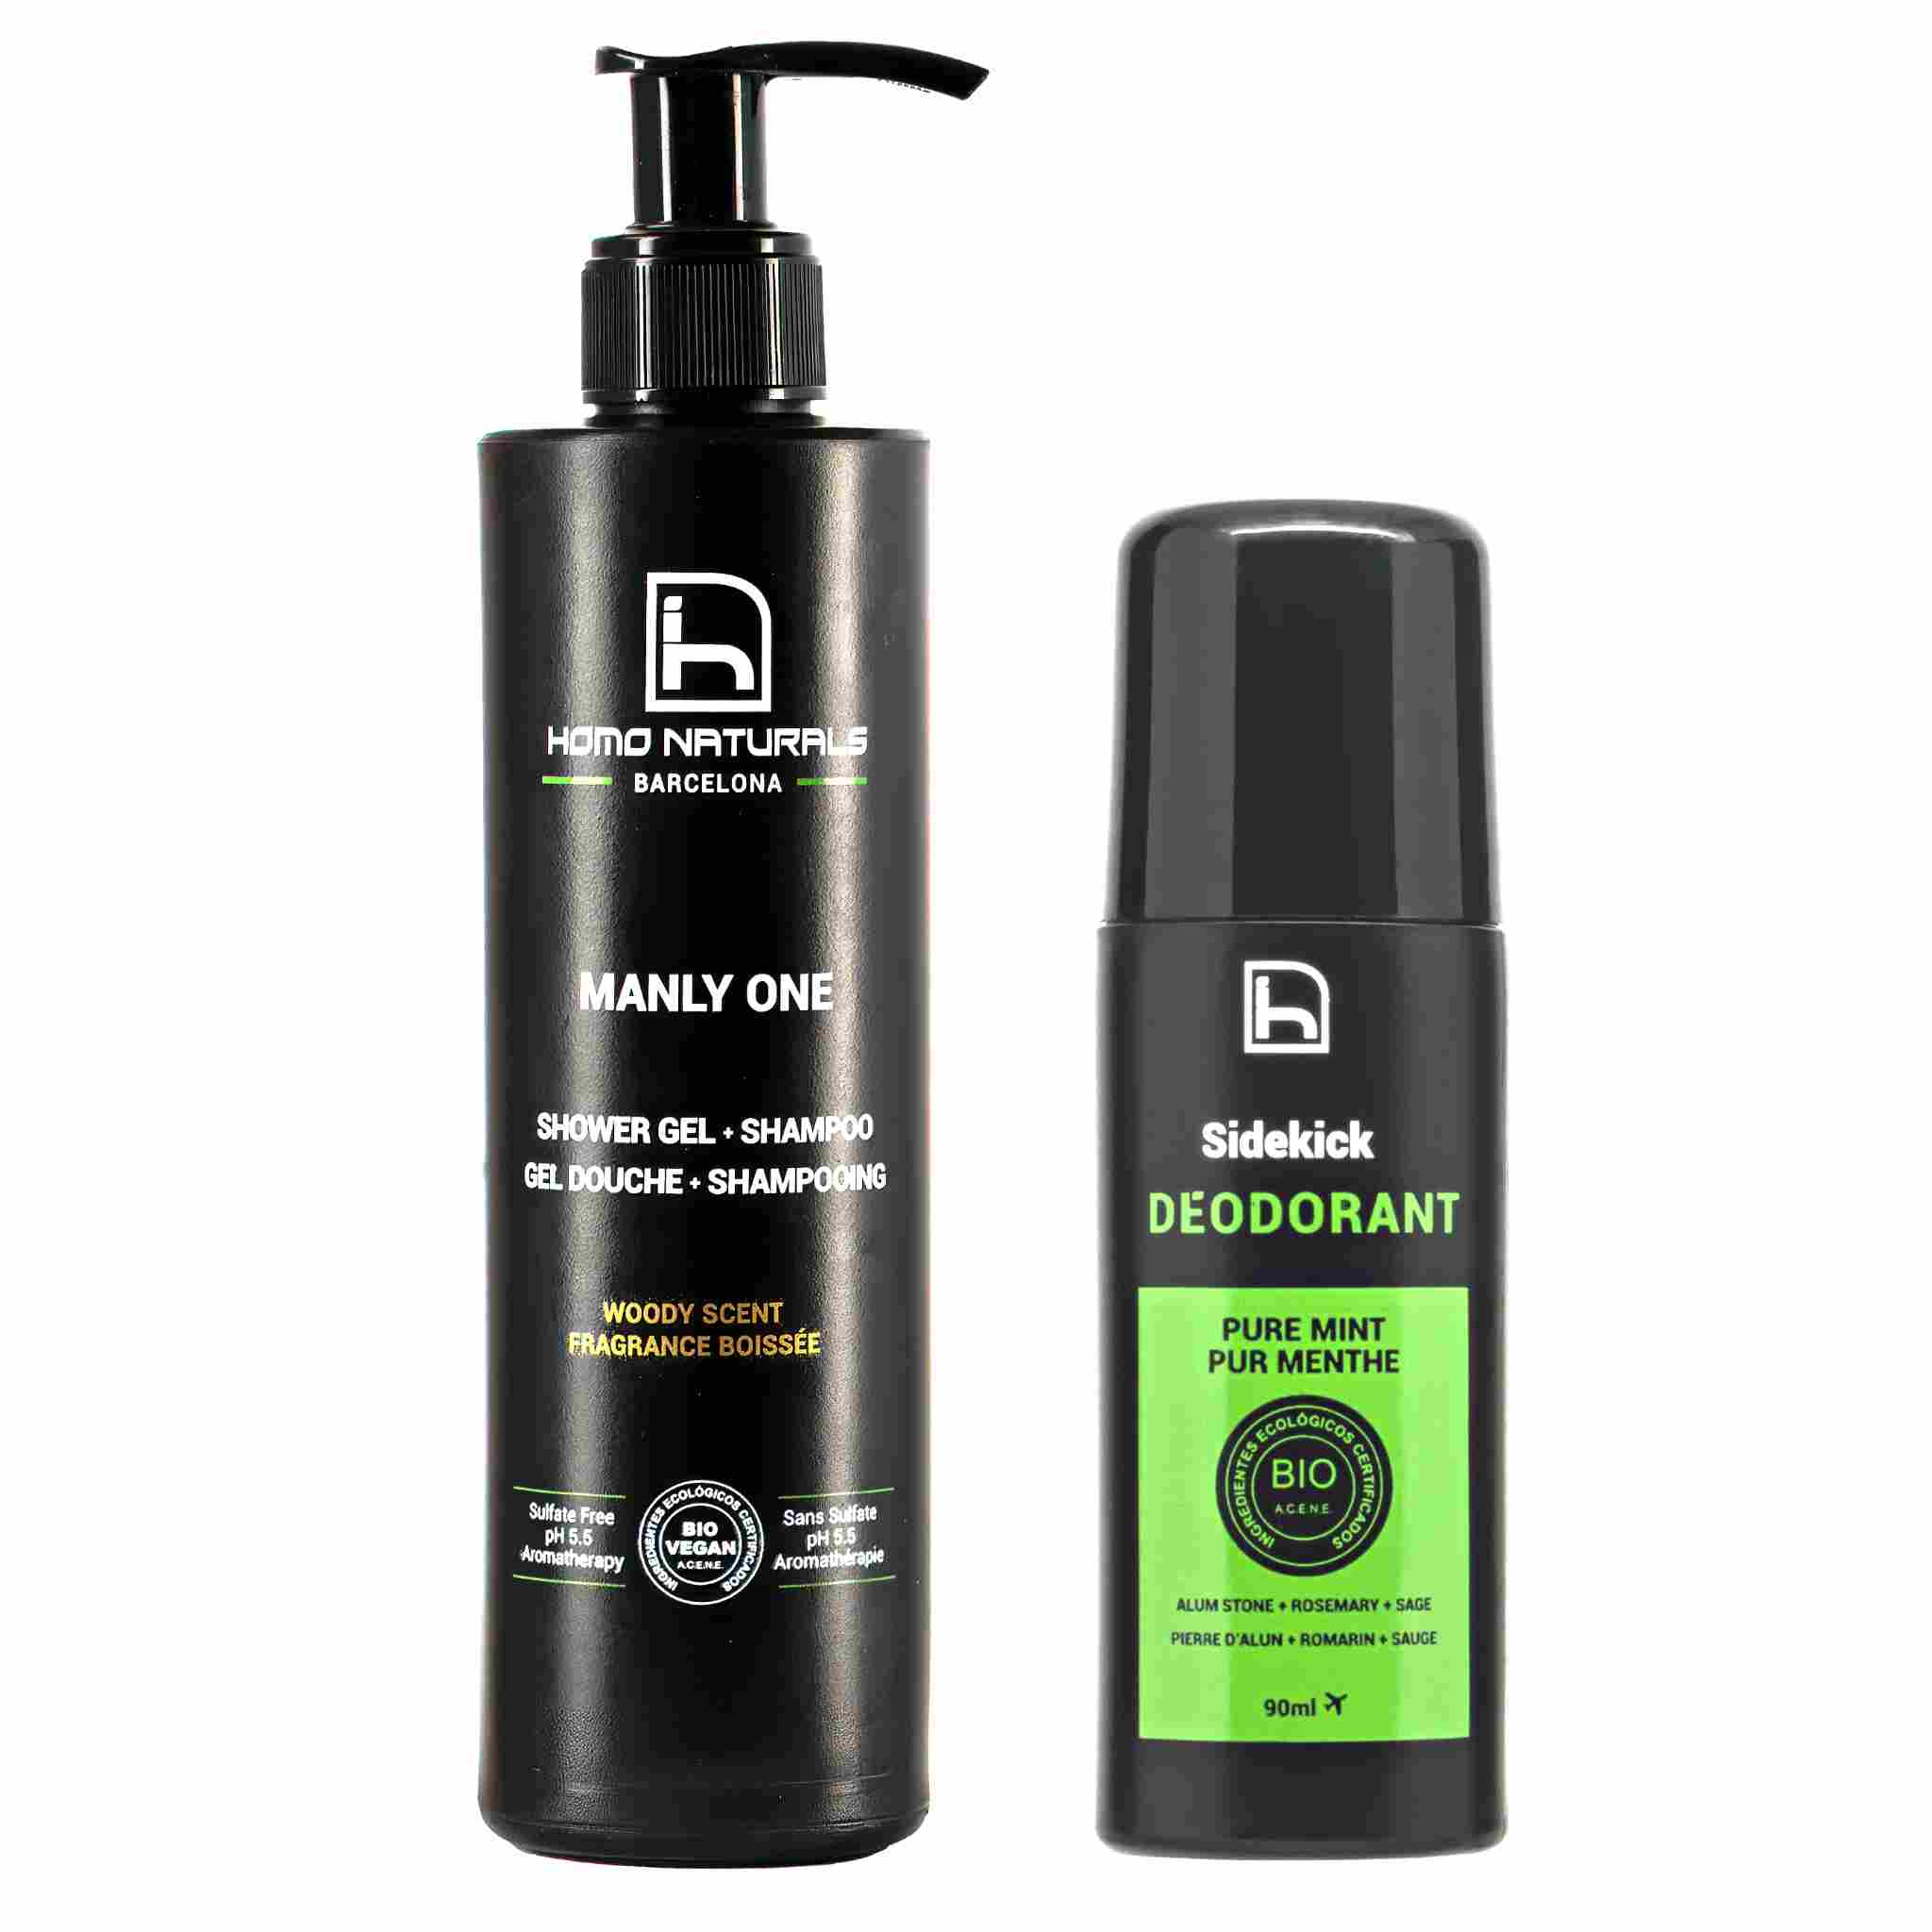 Ecological deodorant for men and natural shower gel